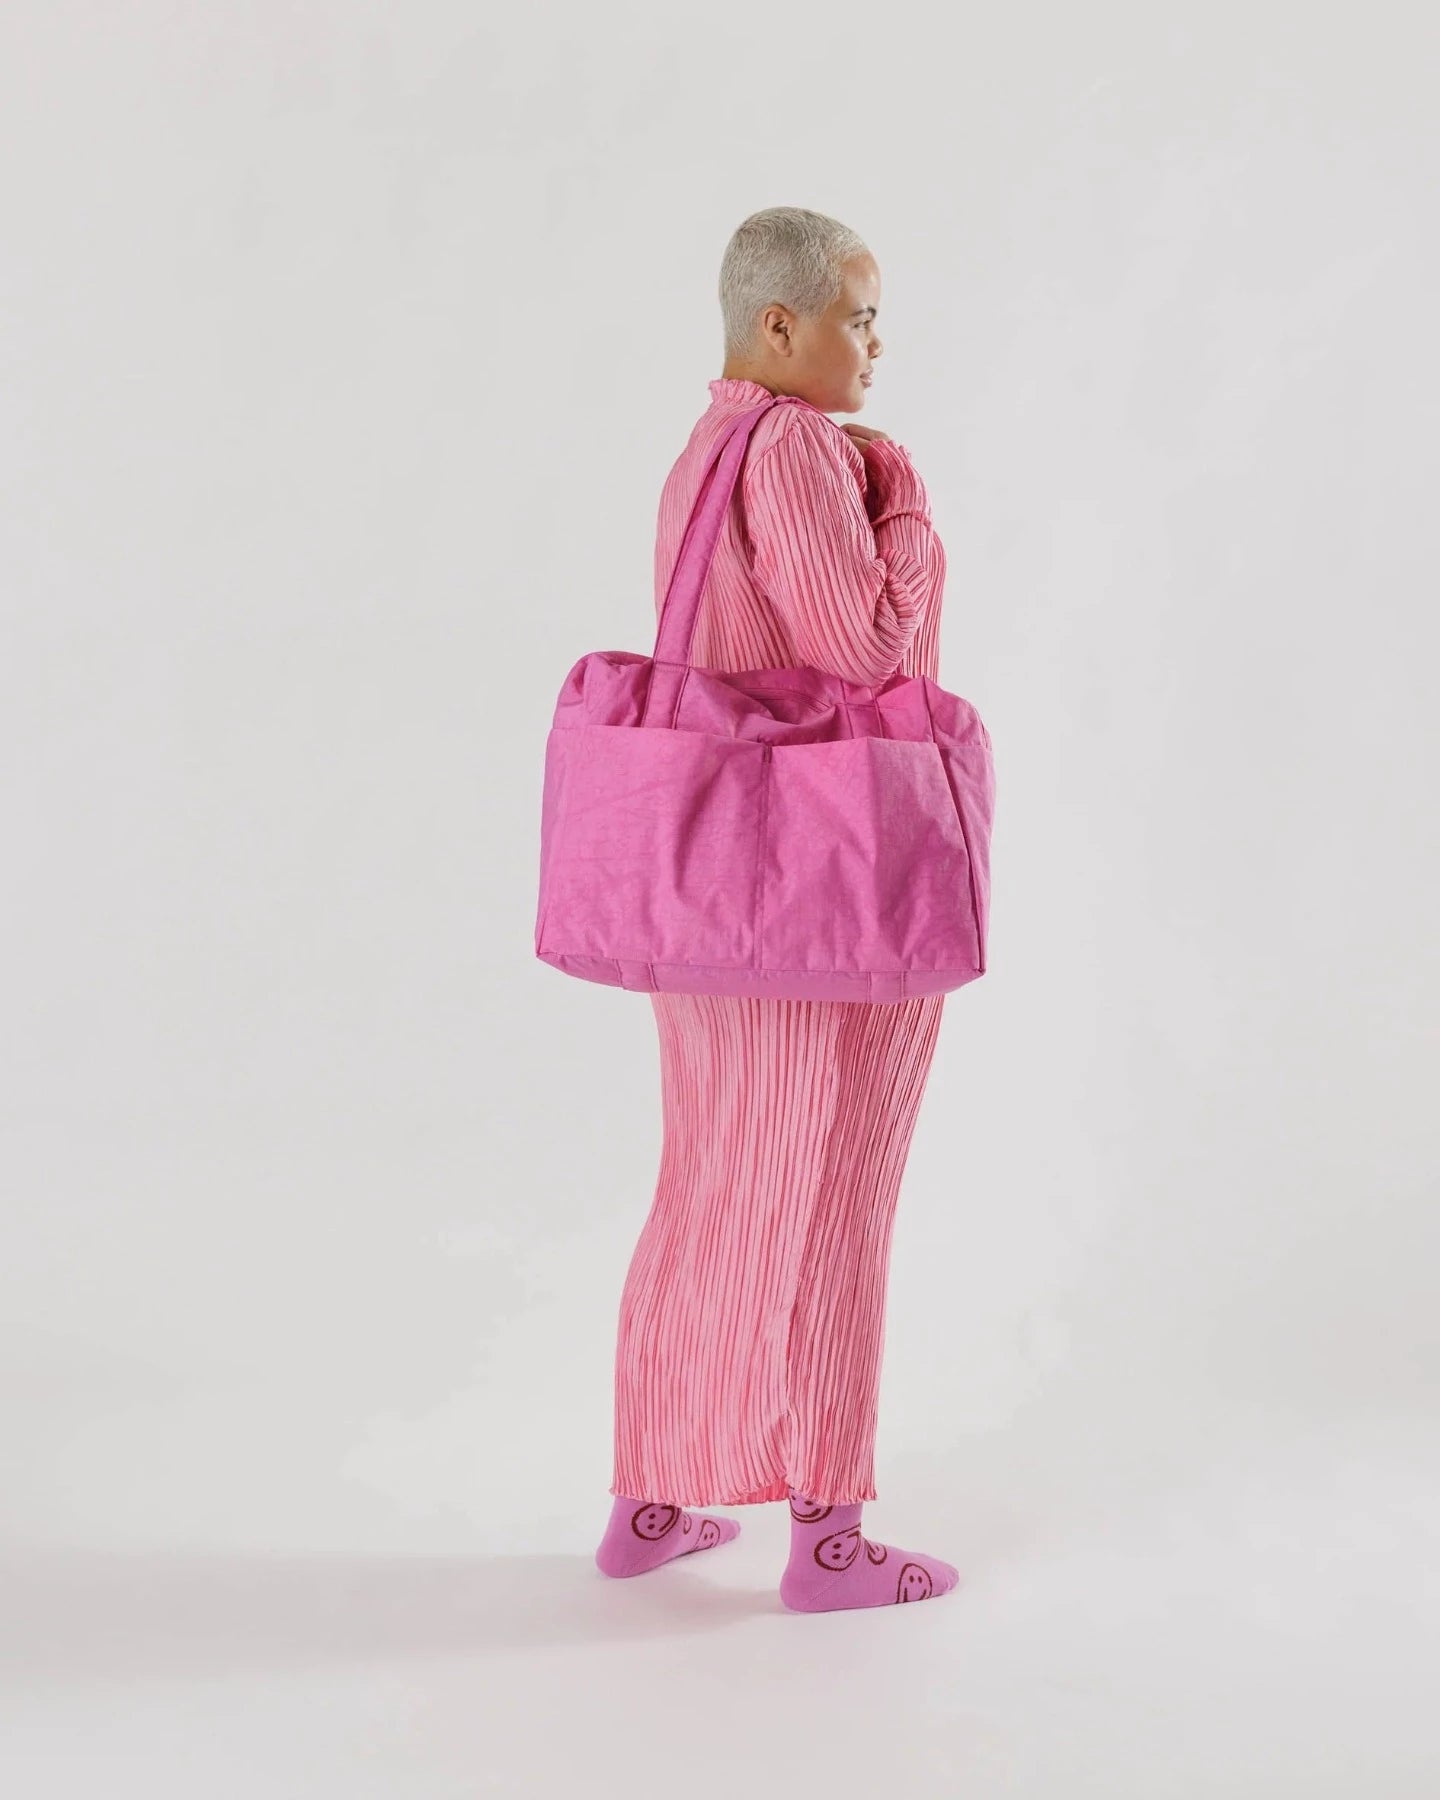 BAGGU Cloud Carry-On Bag (black & extra pink)